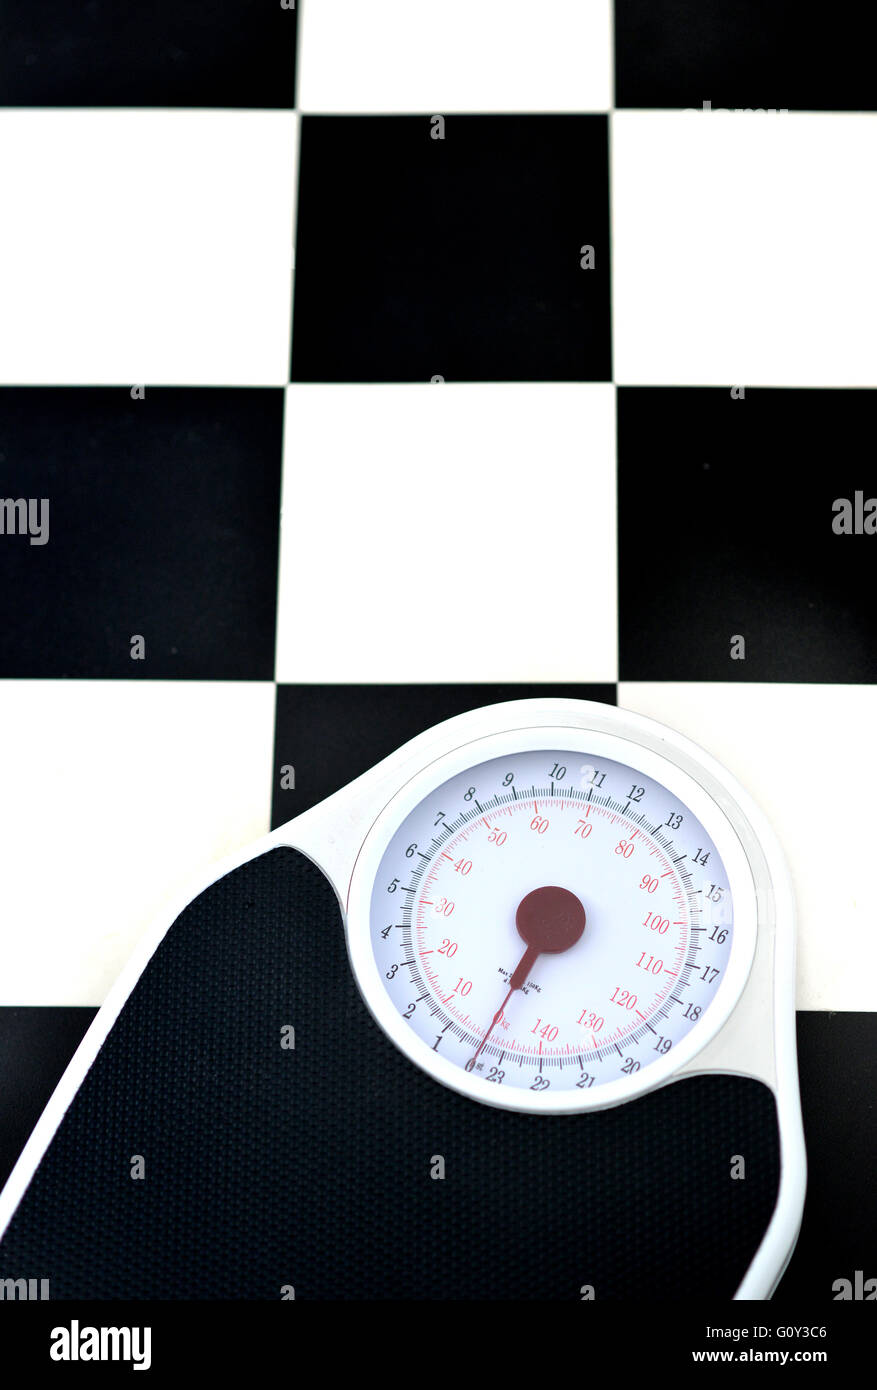 Bathroom scales on checkered floor Stock Photo